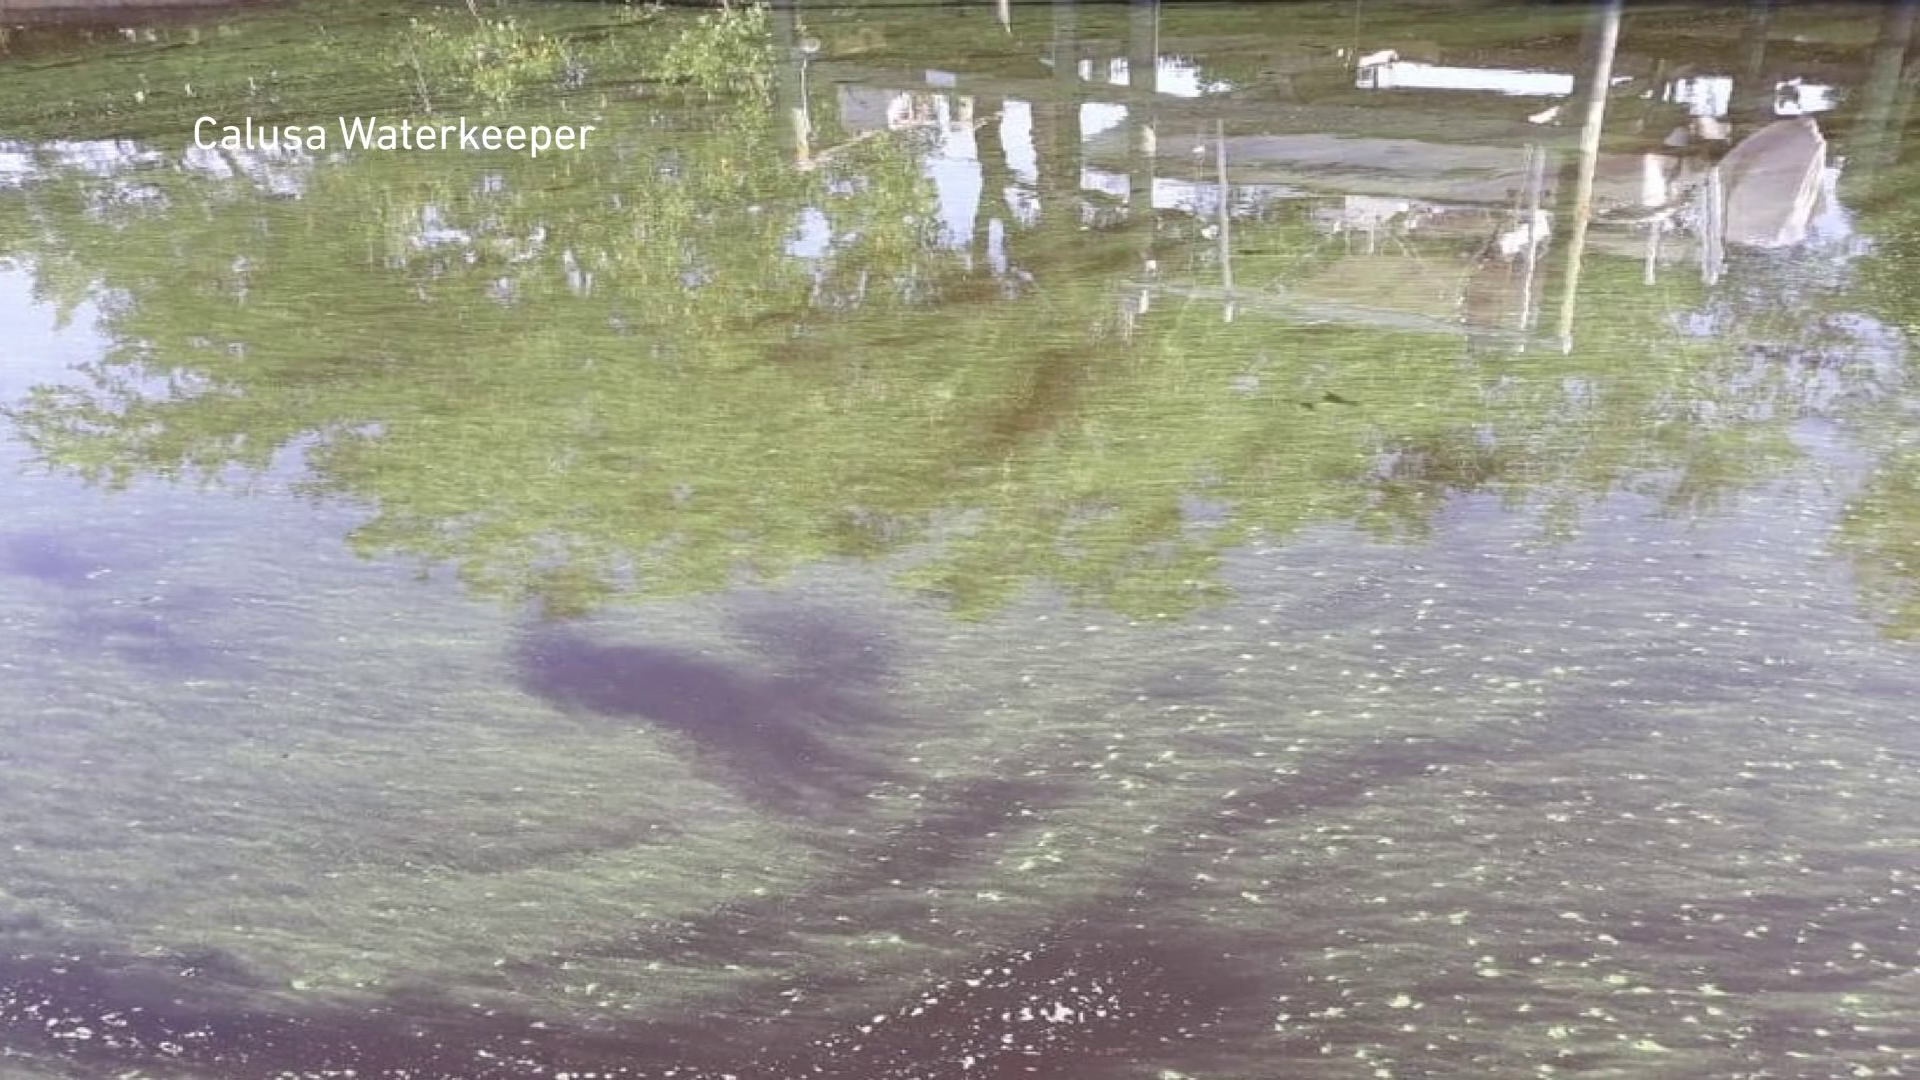 Algal bloom in Alva canal prompts health advisory